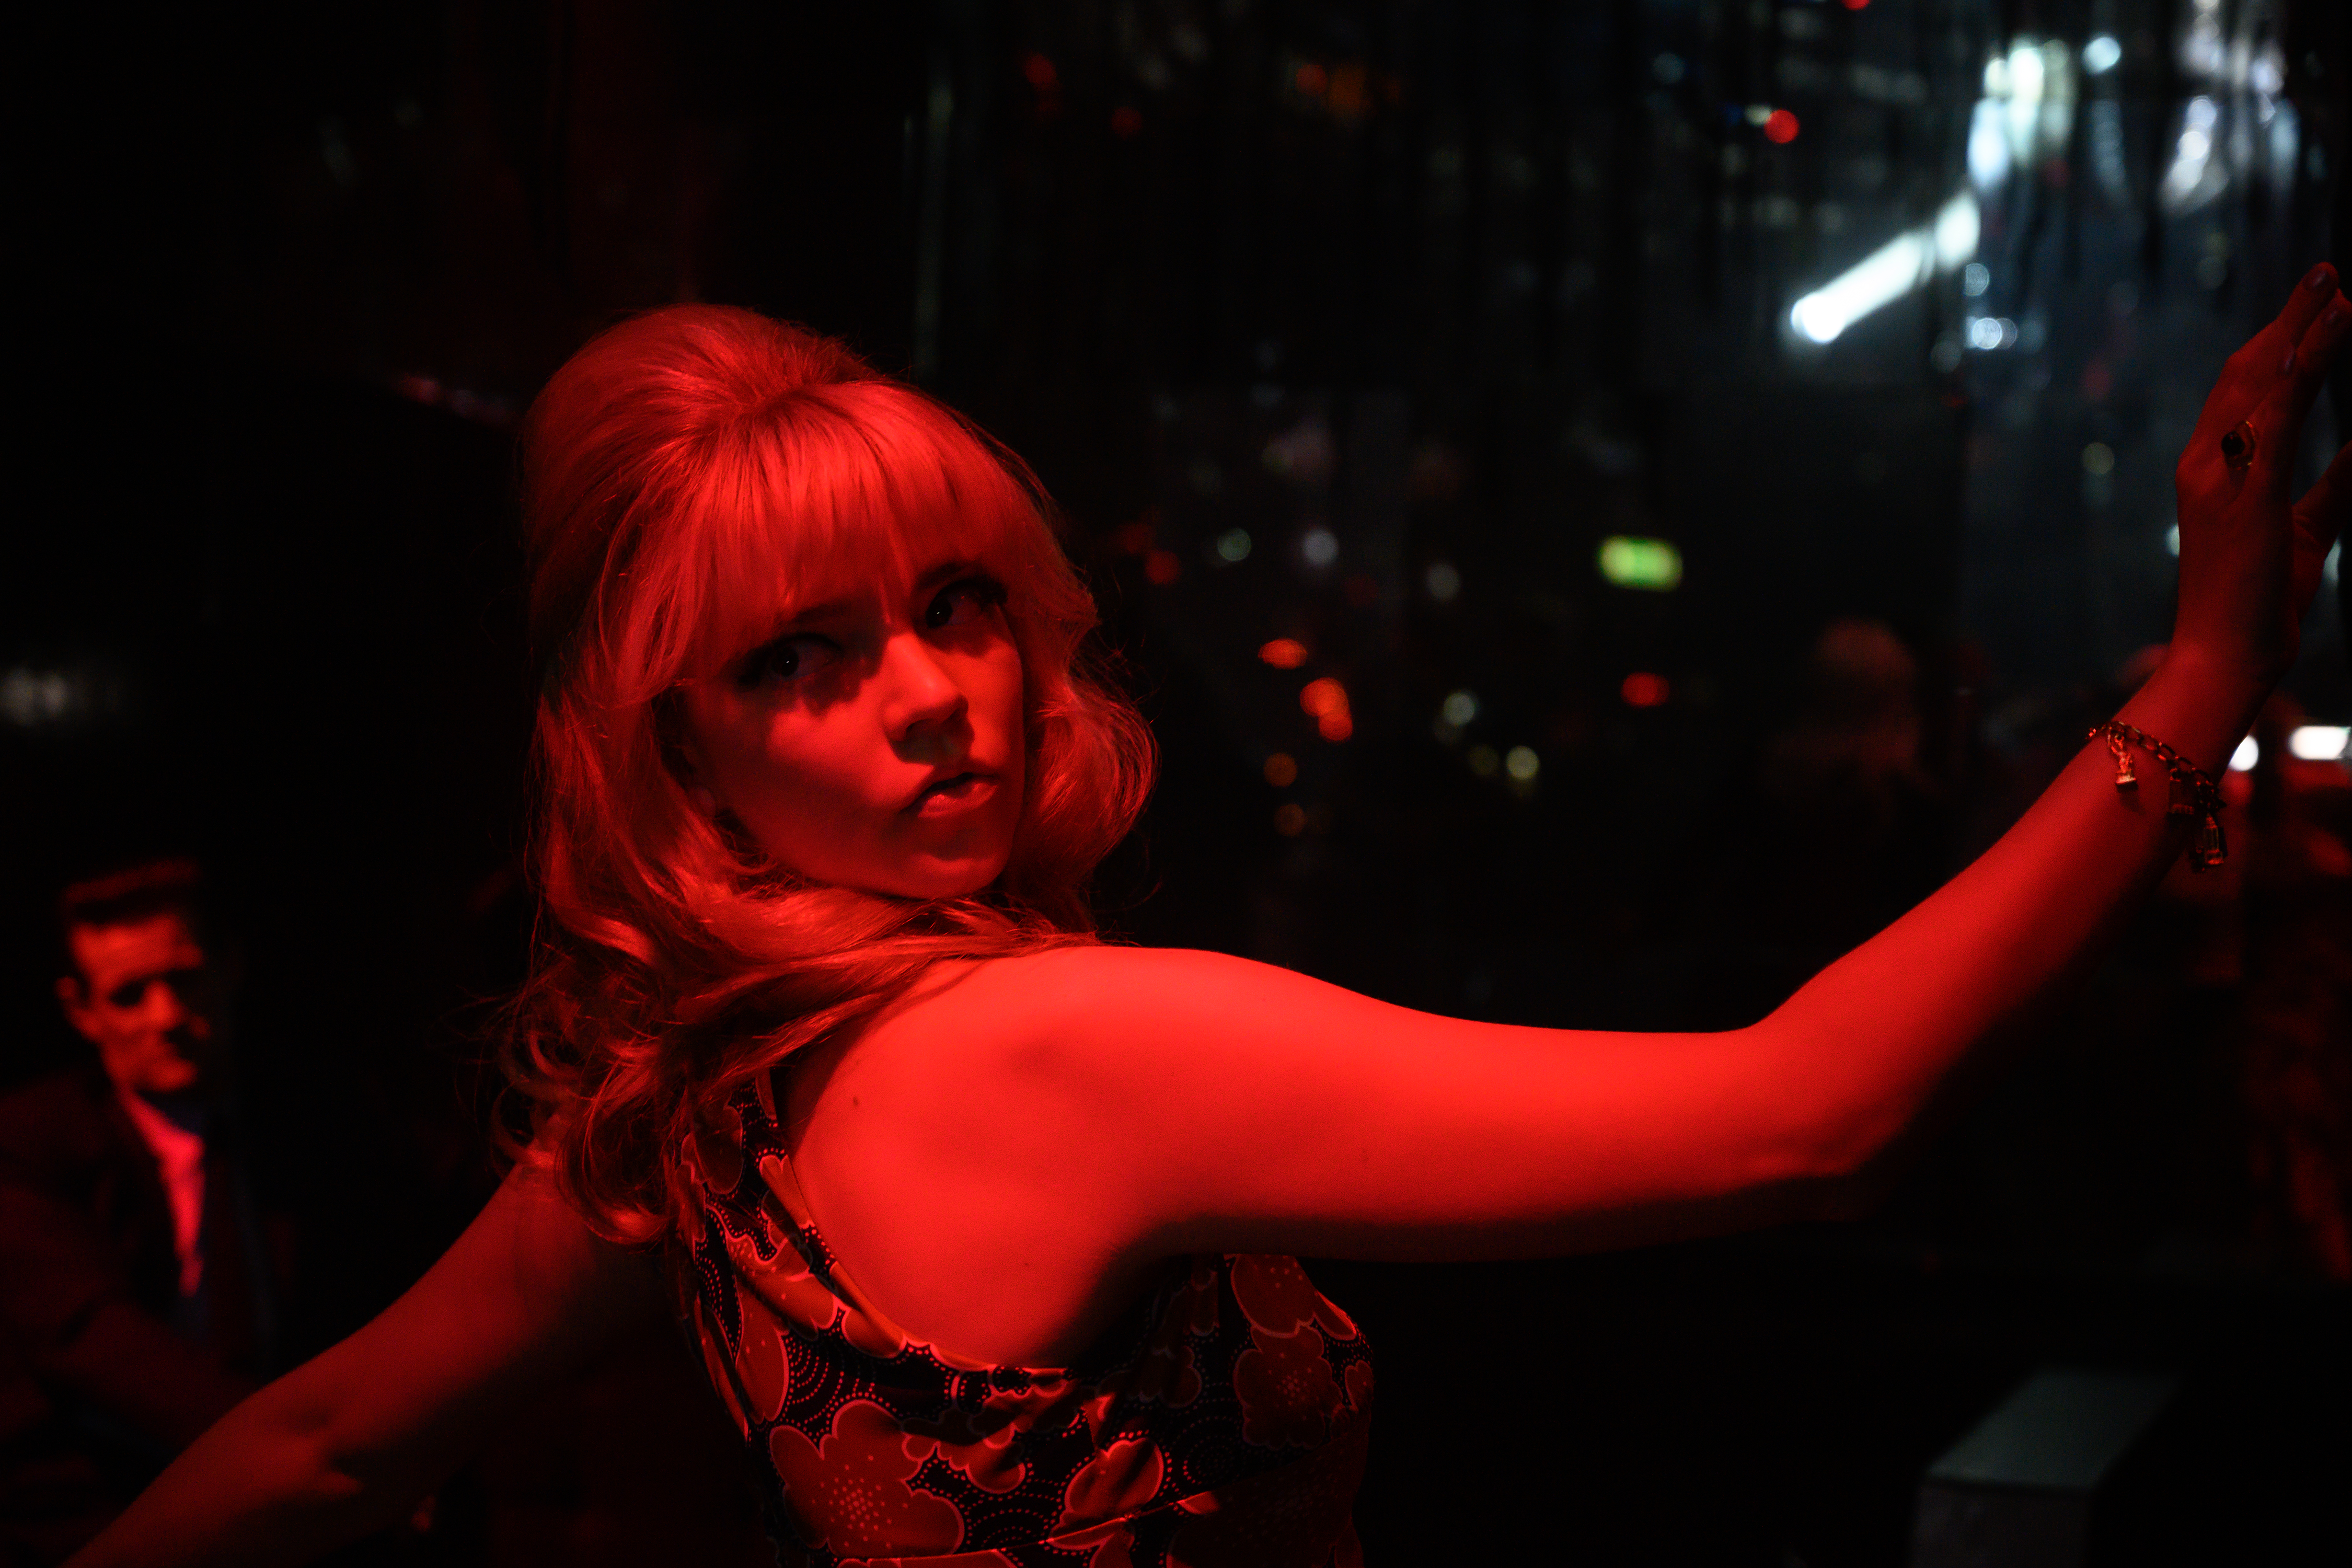 Anya Taylor-Joy poses in deep red light in Last Night in Soho